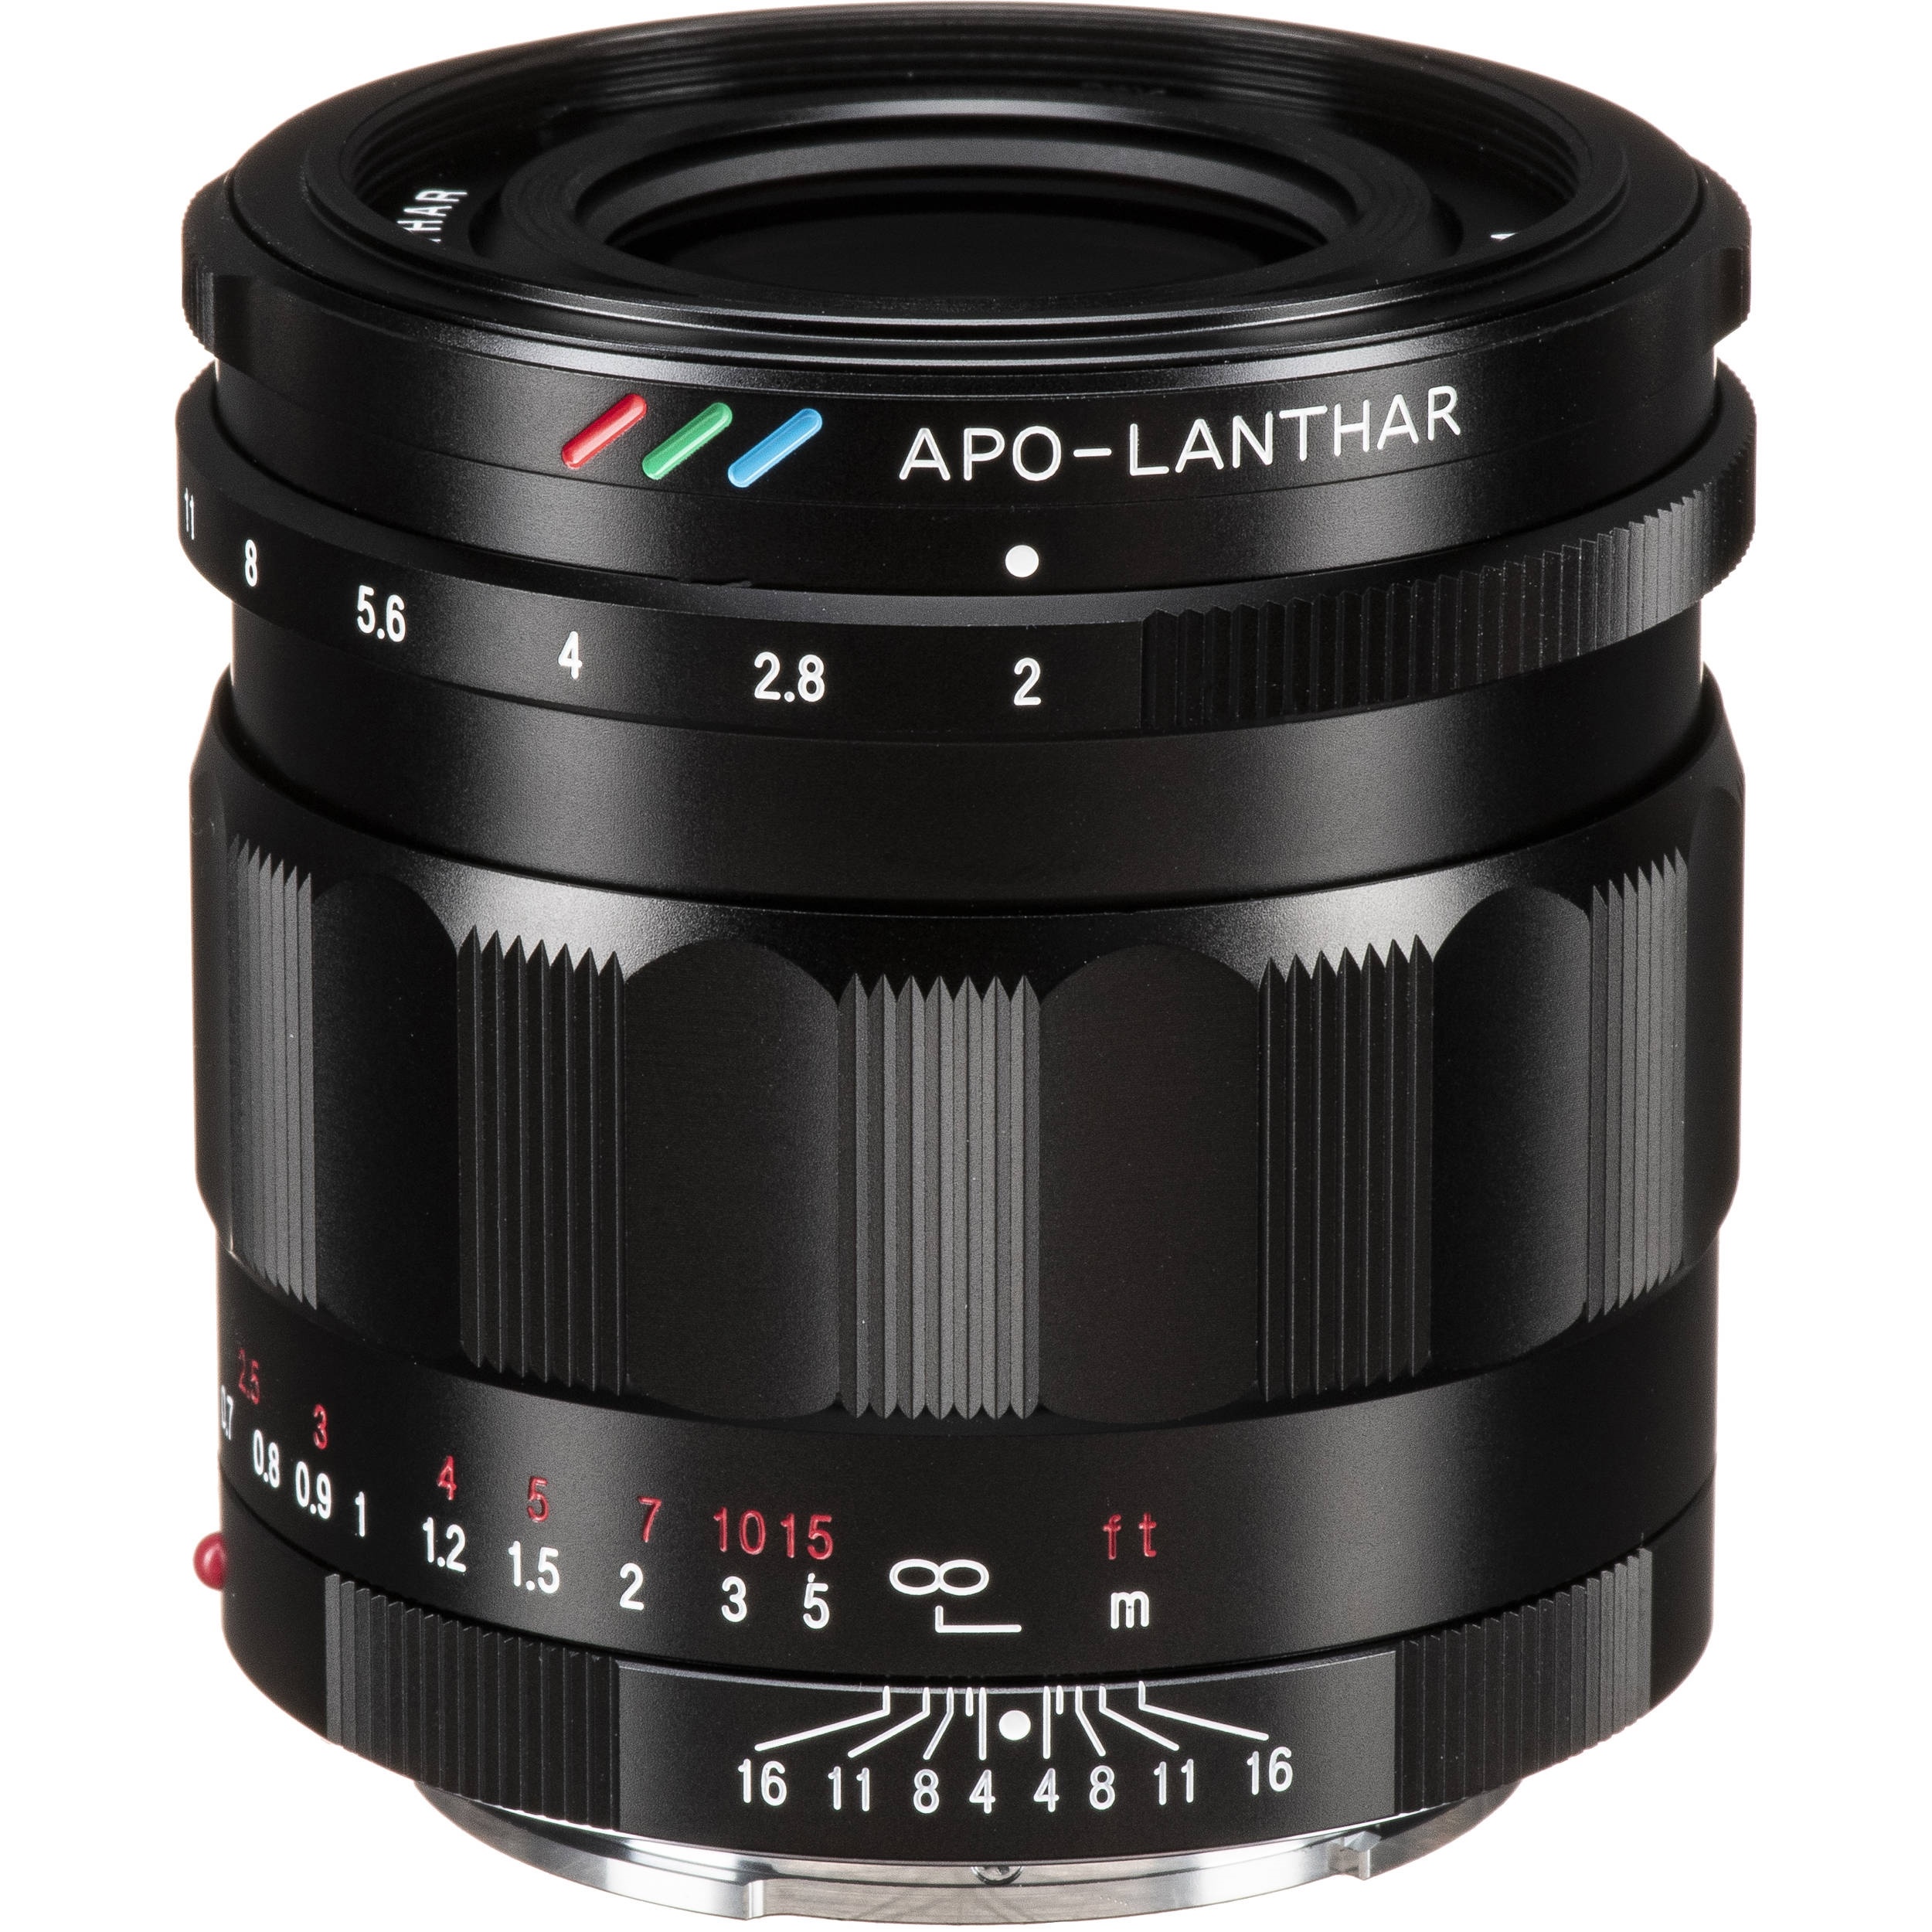 Voigtlander 50mm f/2 APO-Lanthar Lens: Sony FE